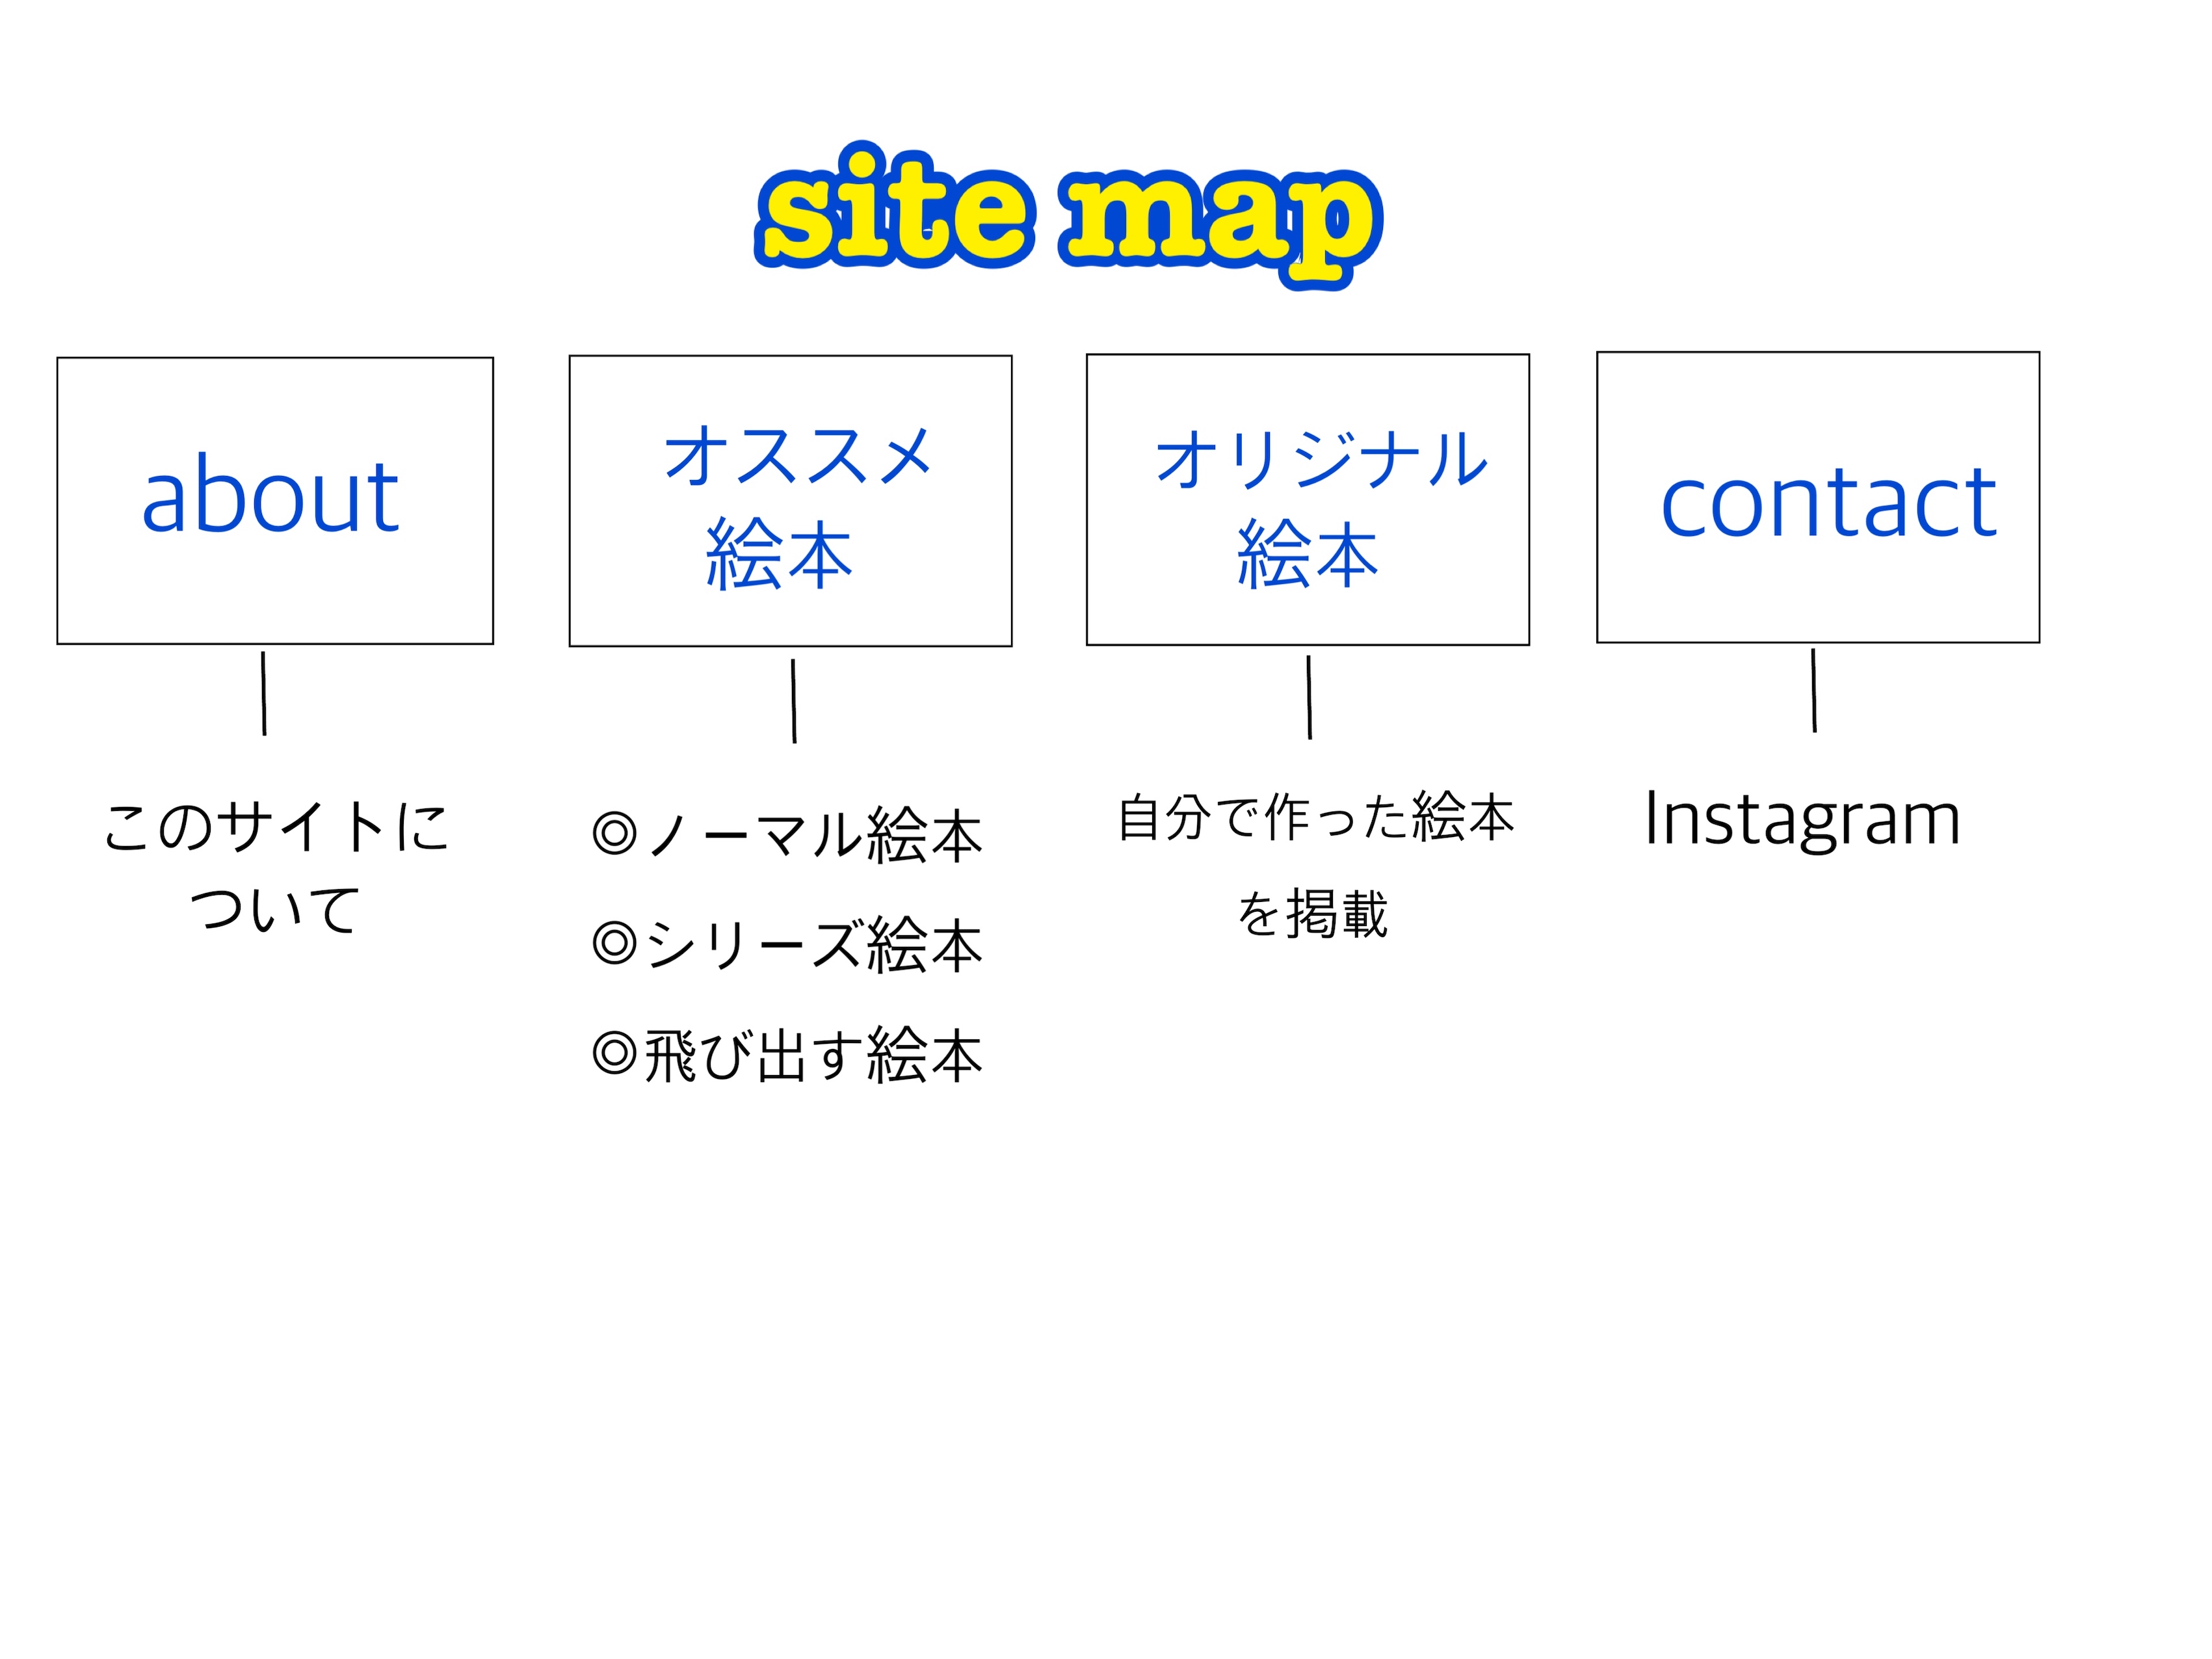 sitemap02.JPG